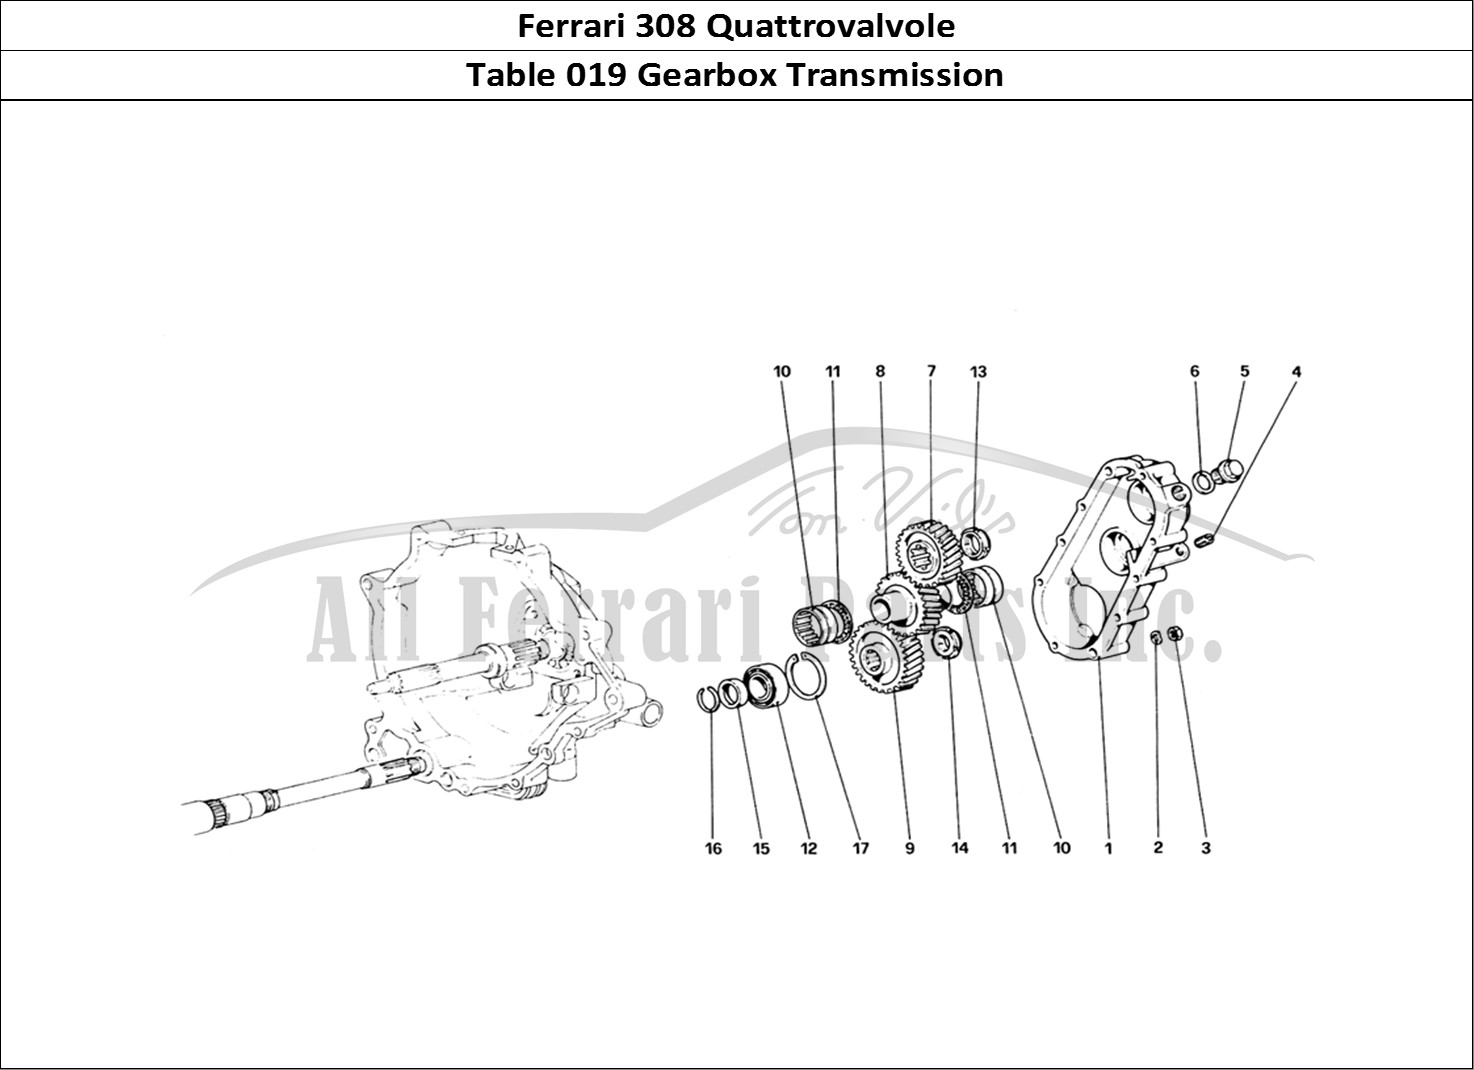 Ferrari Parts Ferrari 308 Quattrovalvole (1985) Page 019 Gearbox Transmission